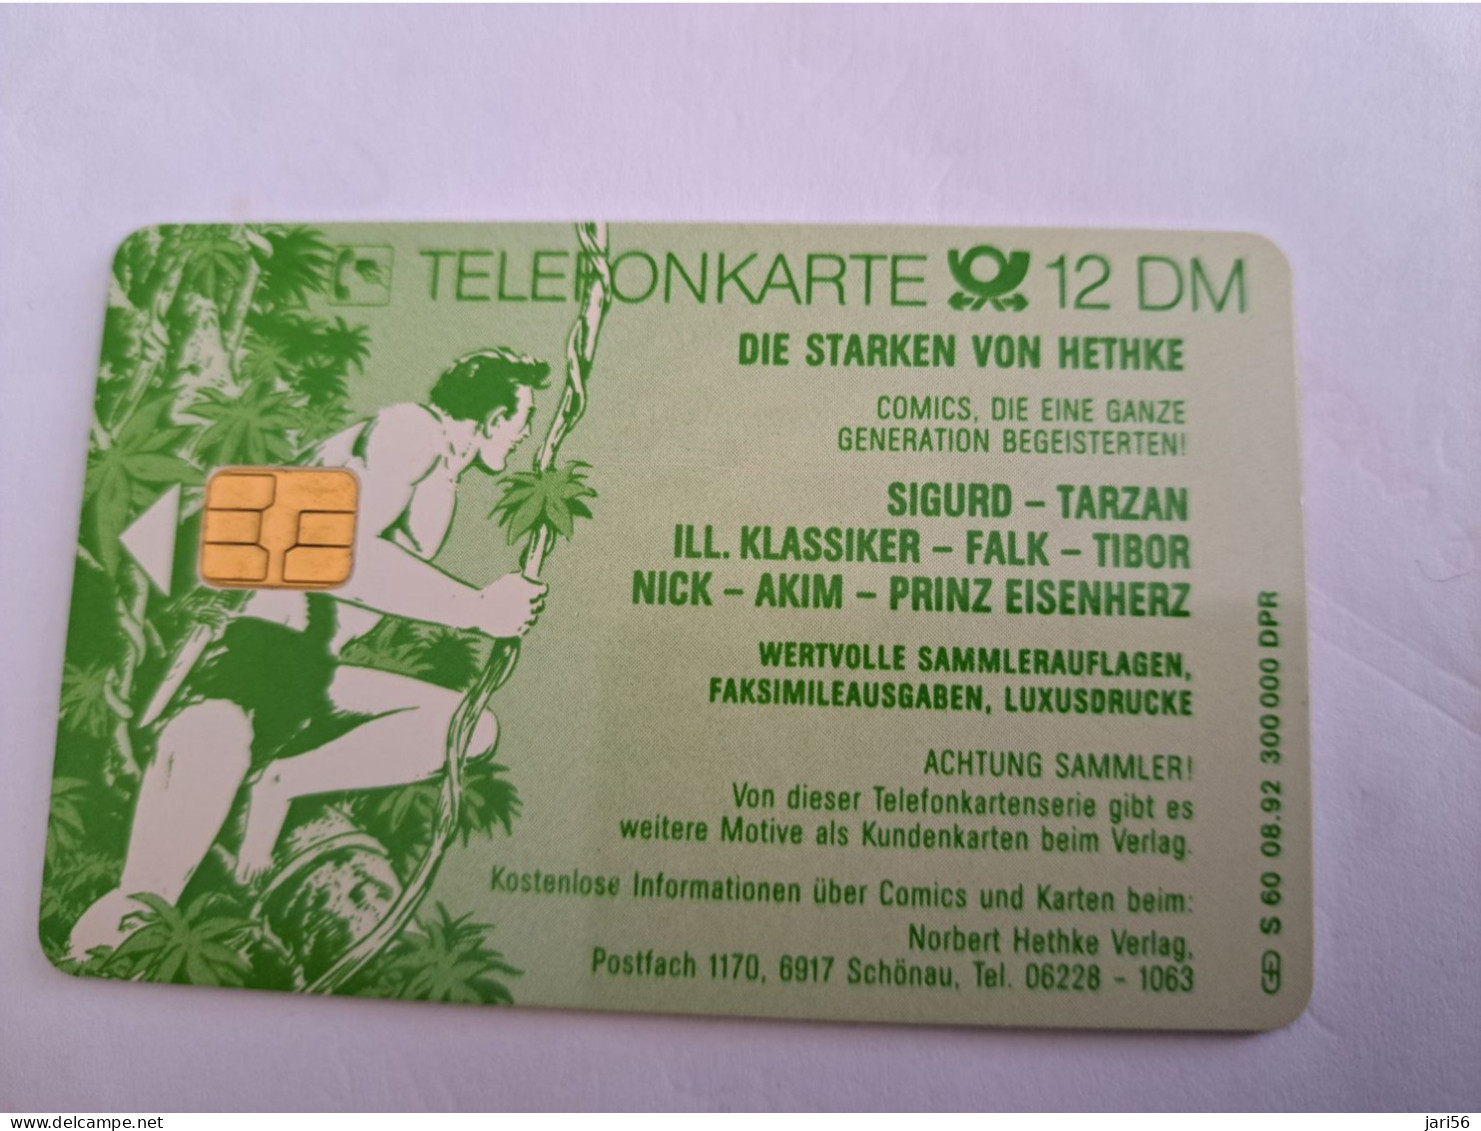 DUITSLAND/ GERMANY  CHIPCARD/ TIBOR/ COMIC/ STRIP//    / 12 DM  CARD / S60 / USED   CARD     **15038** - S-Series: Schalterserie Mit Fremdfirmenreklame